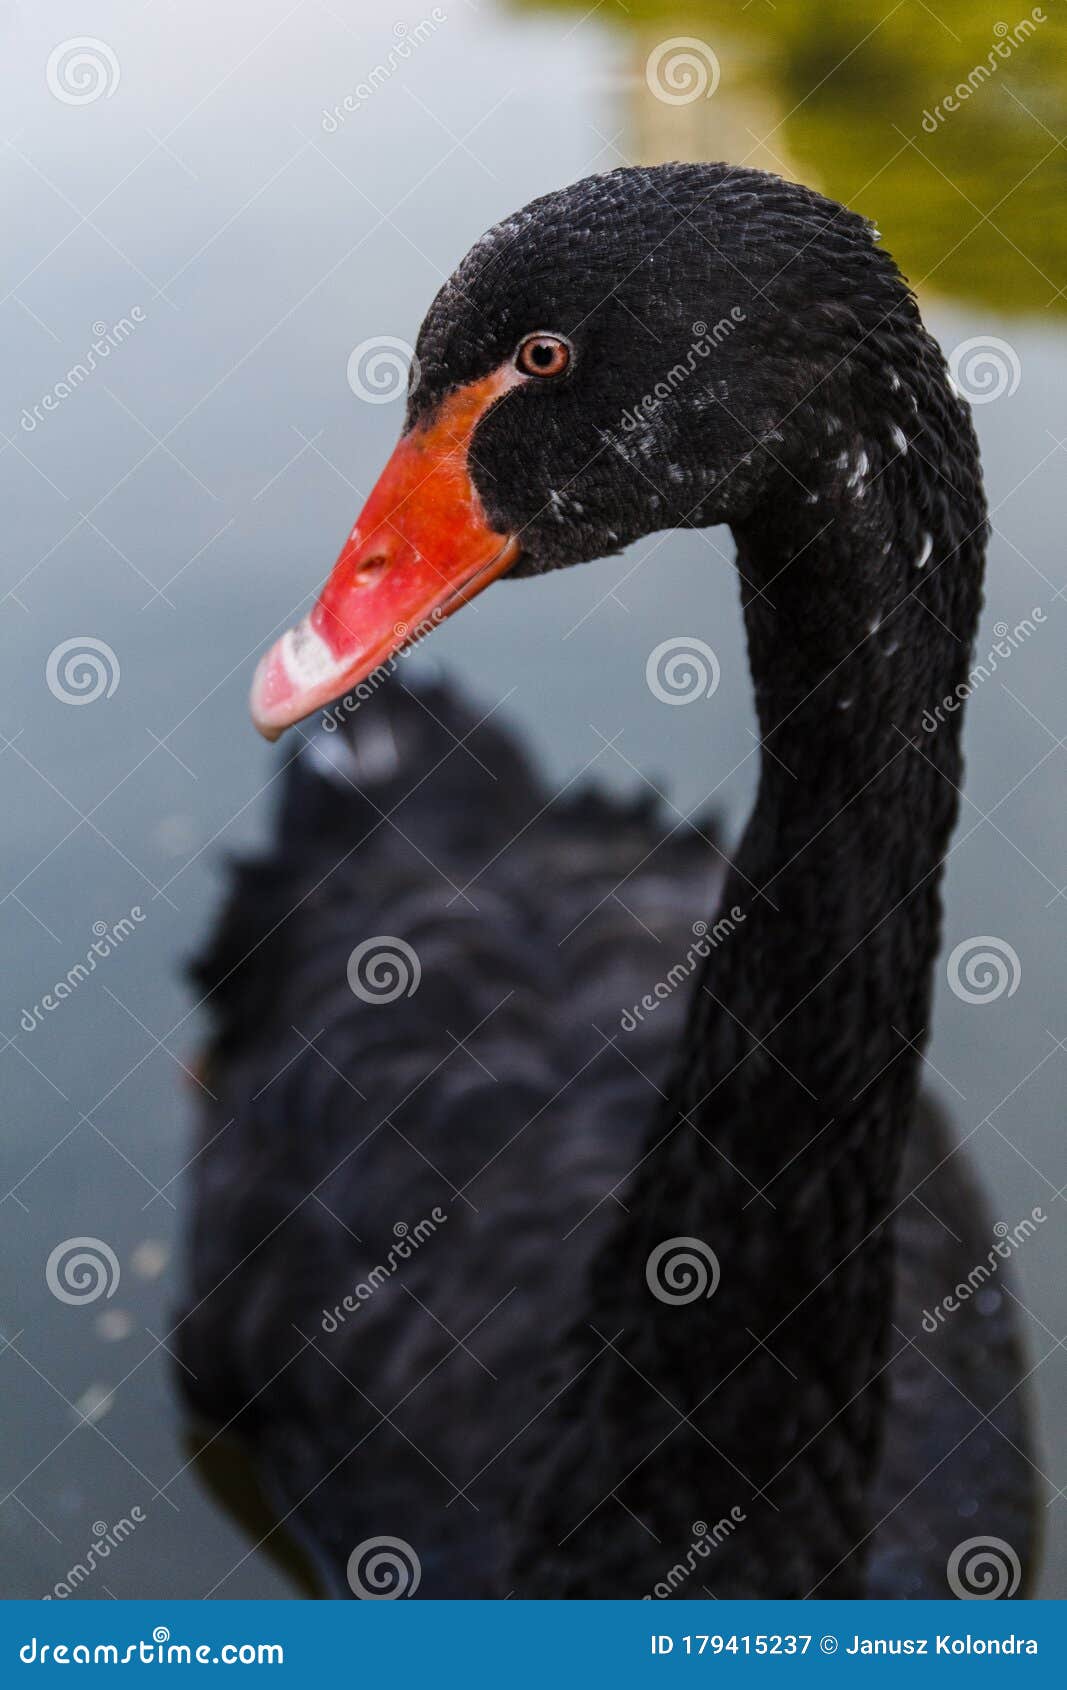 Black Swan Up Portrait Stock Image Image of metaphor: 179415237